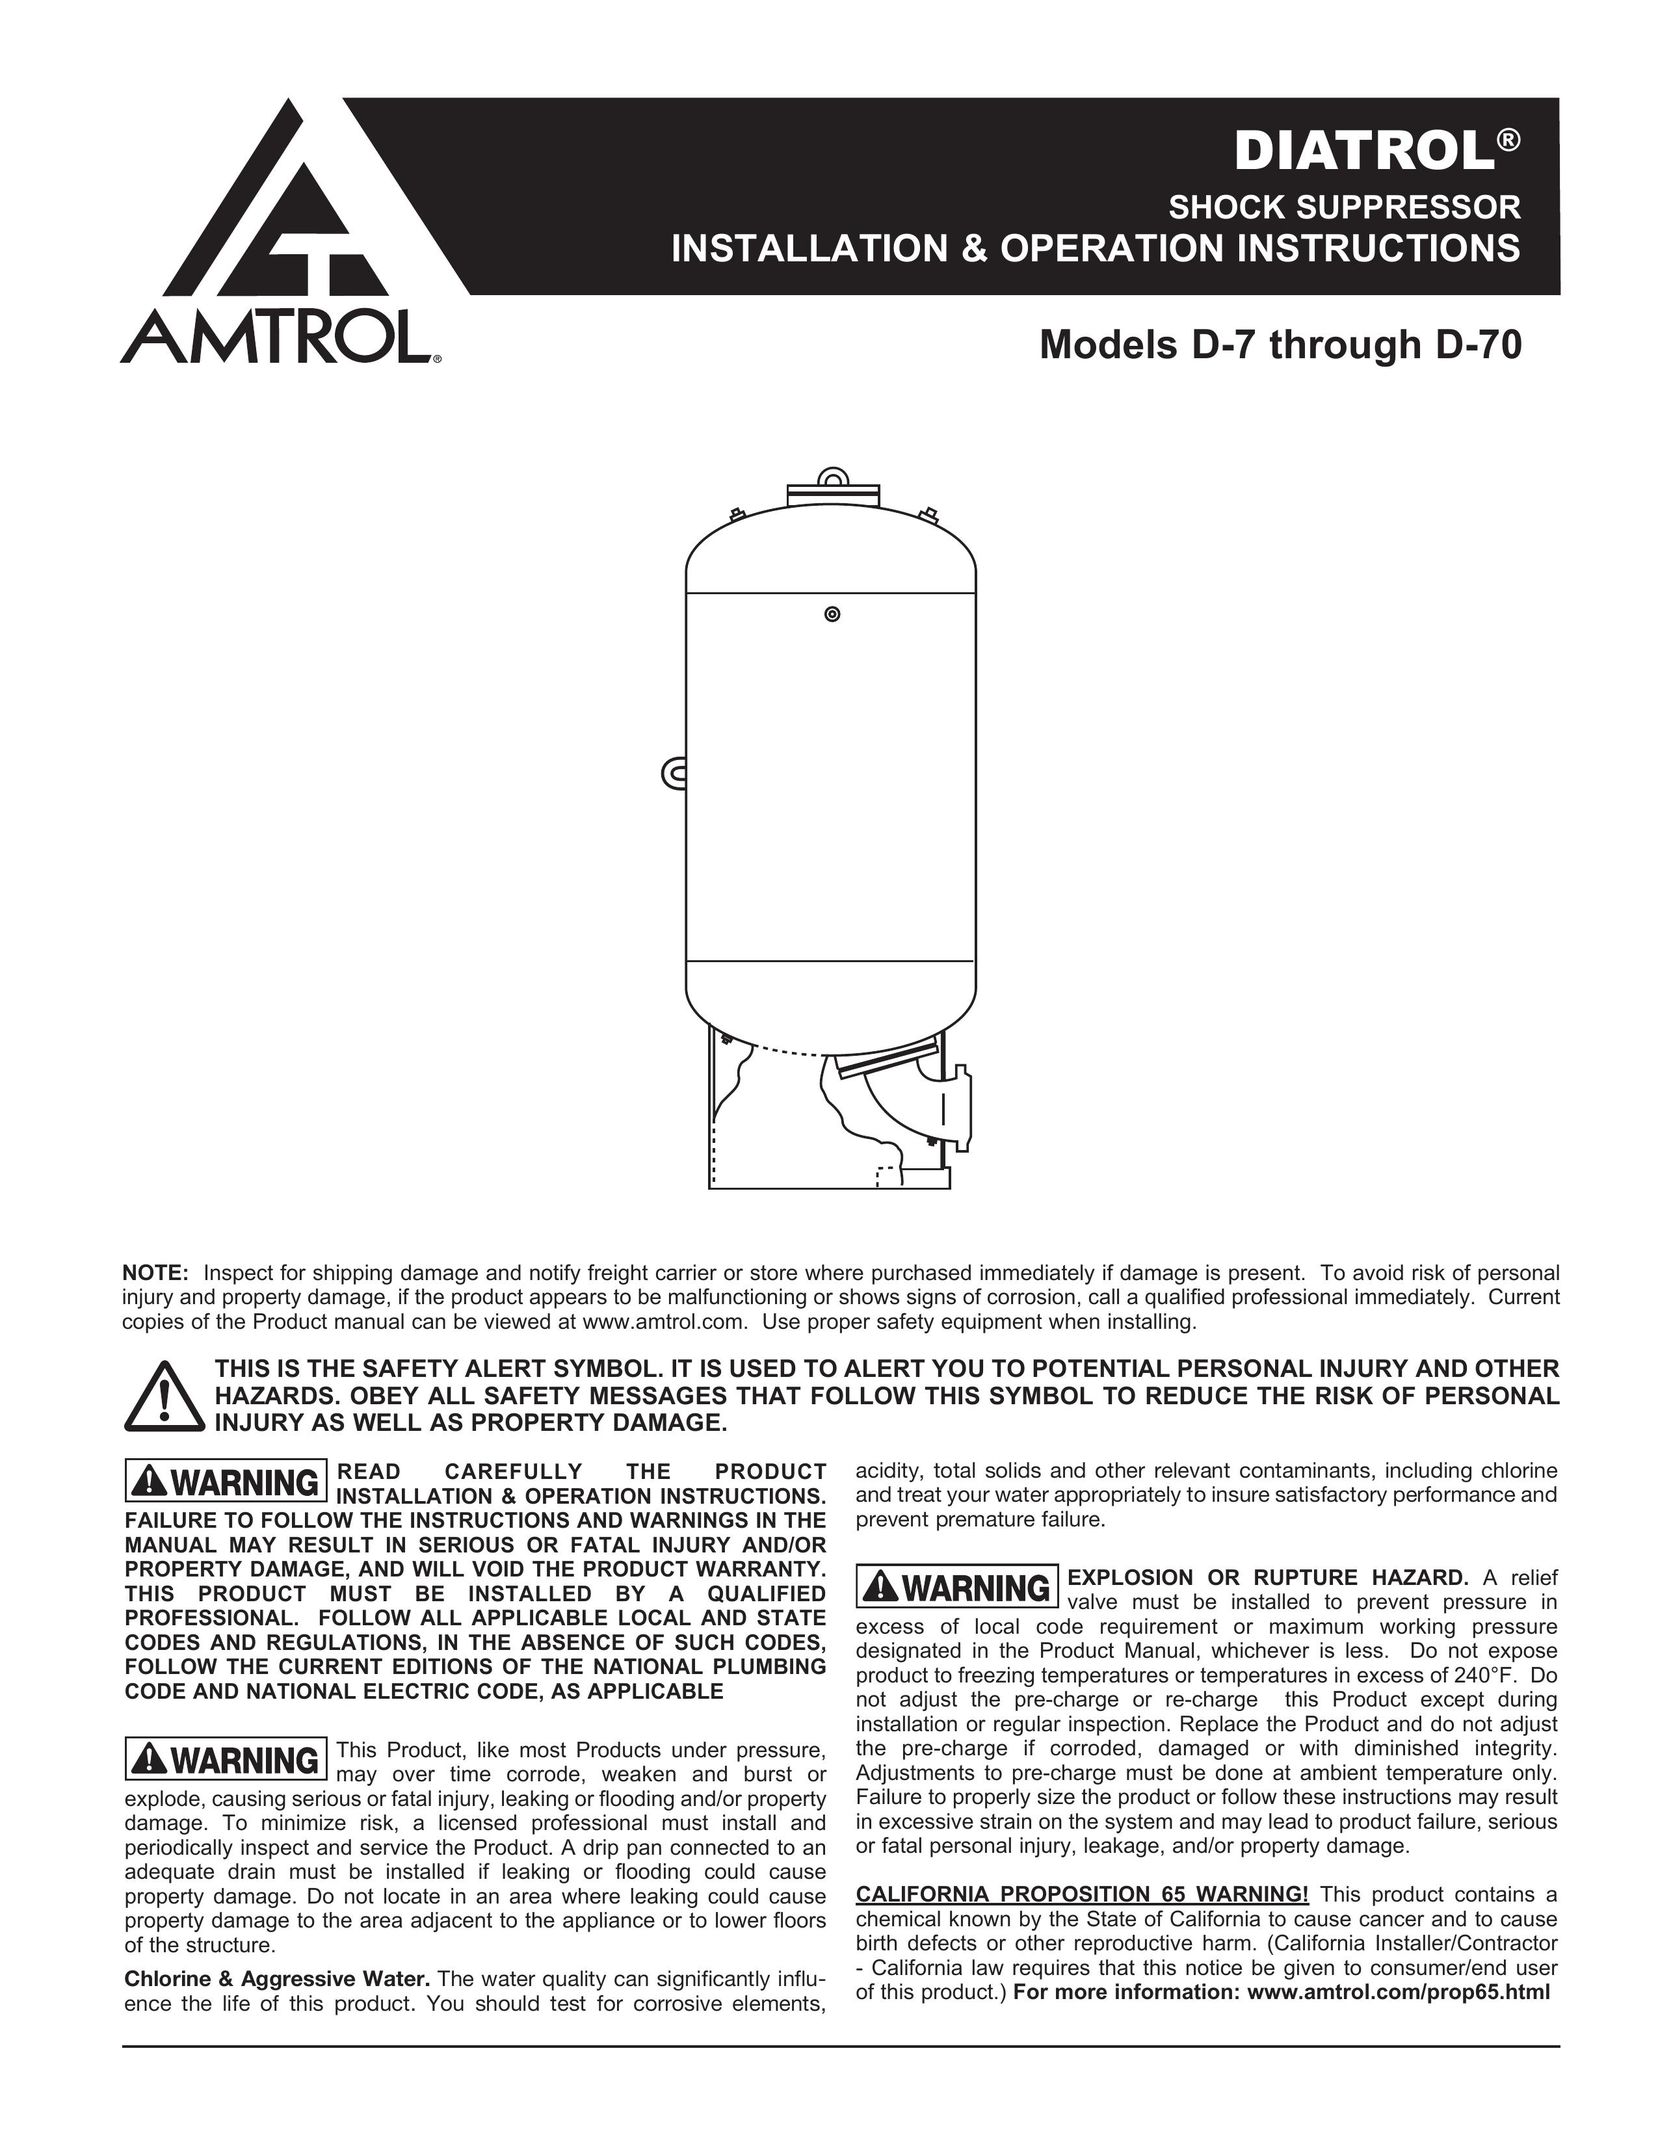 Amtrol D-70 Surge Protector User Manual